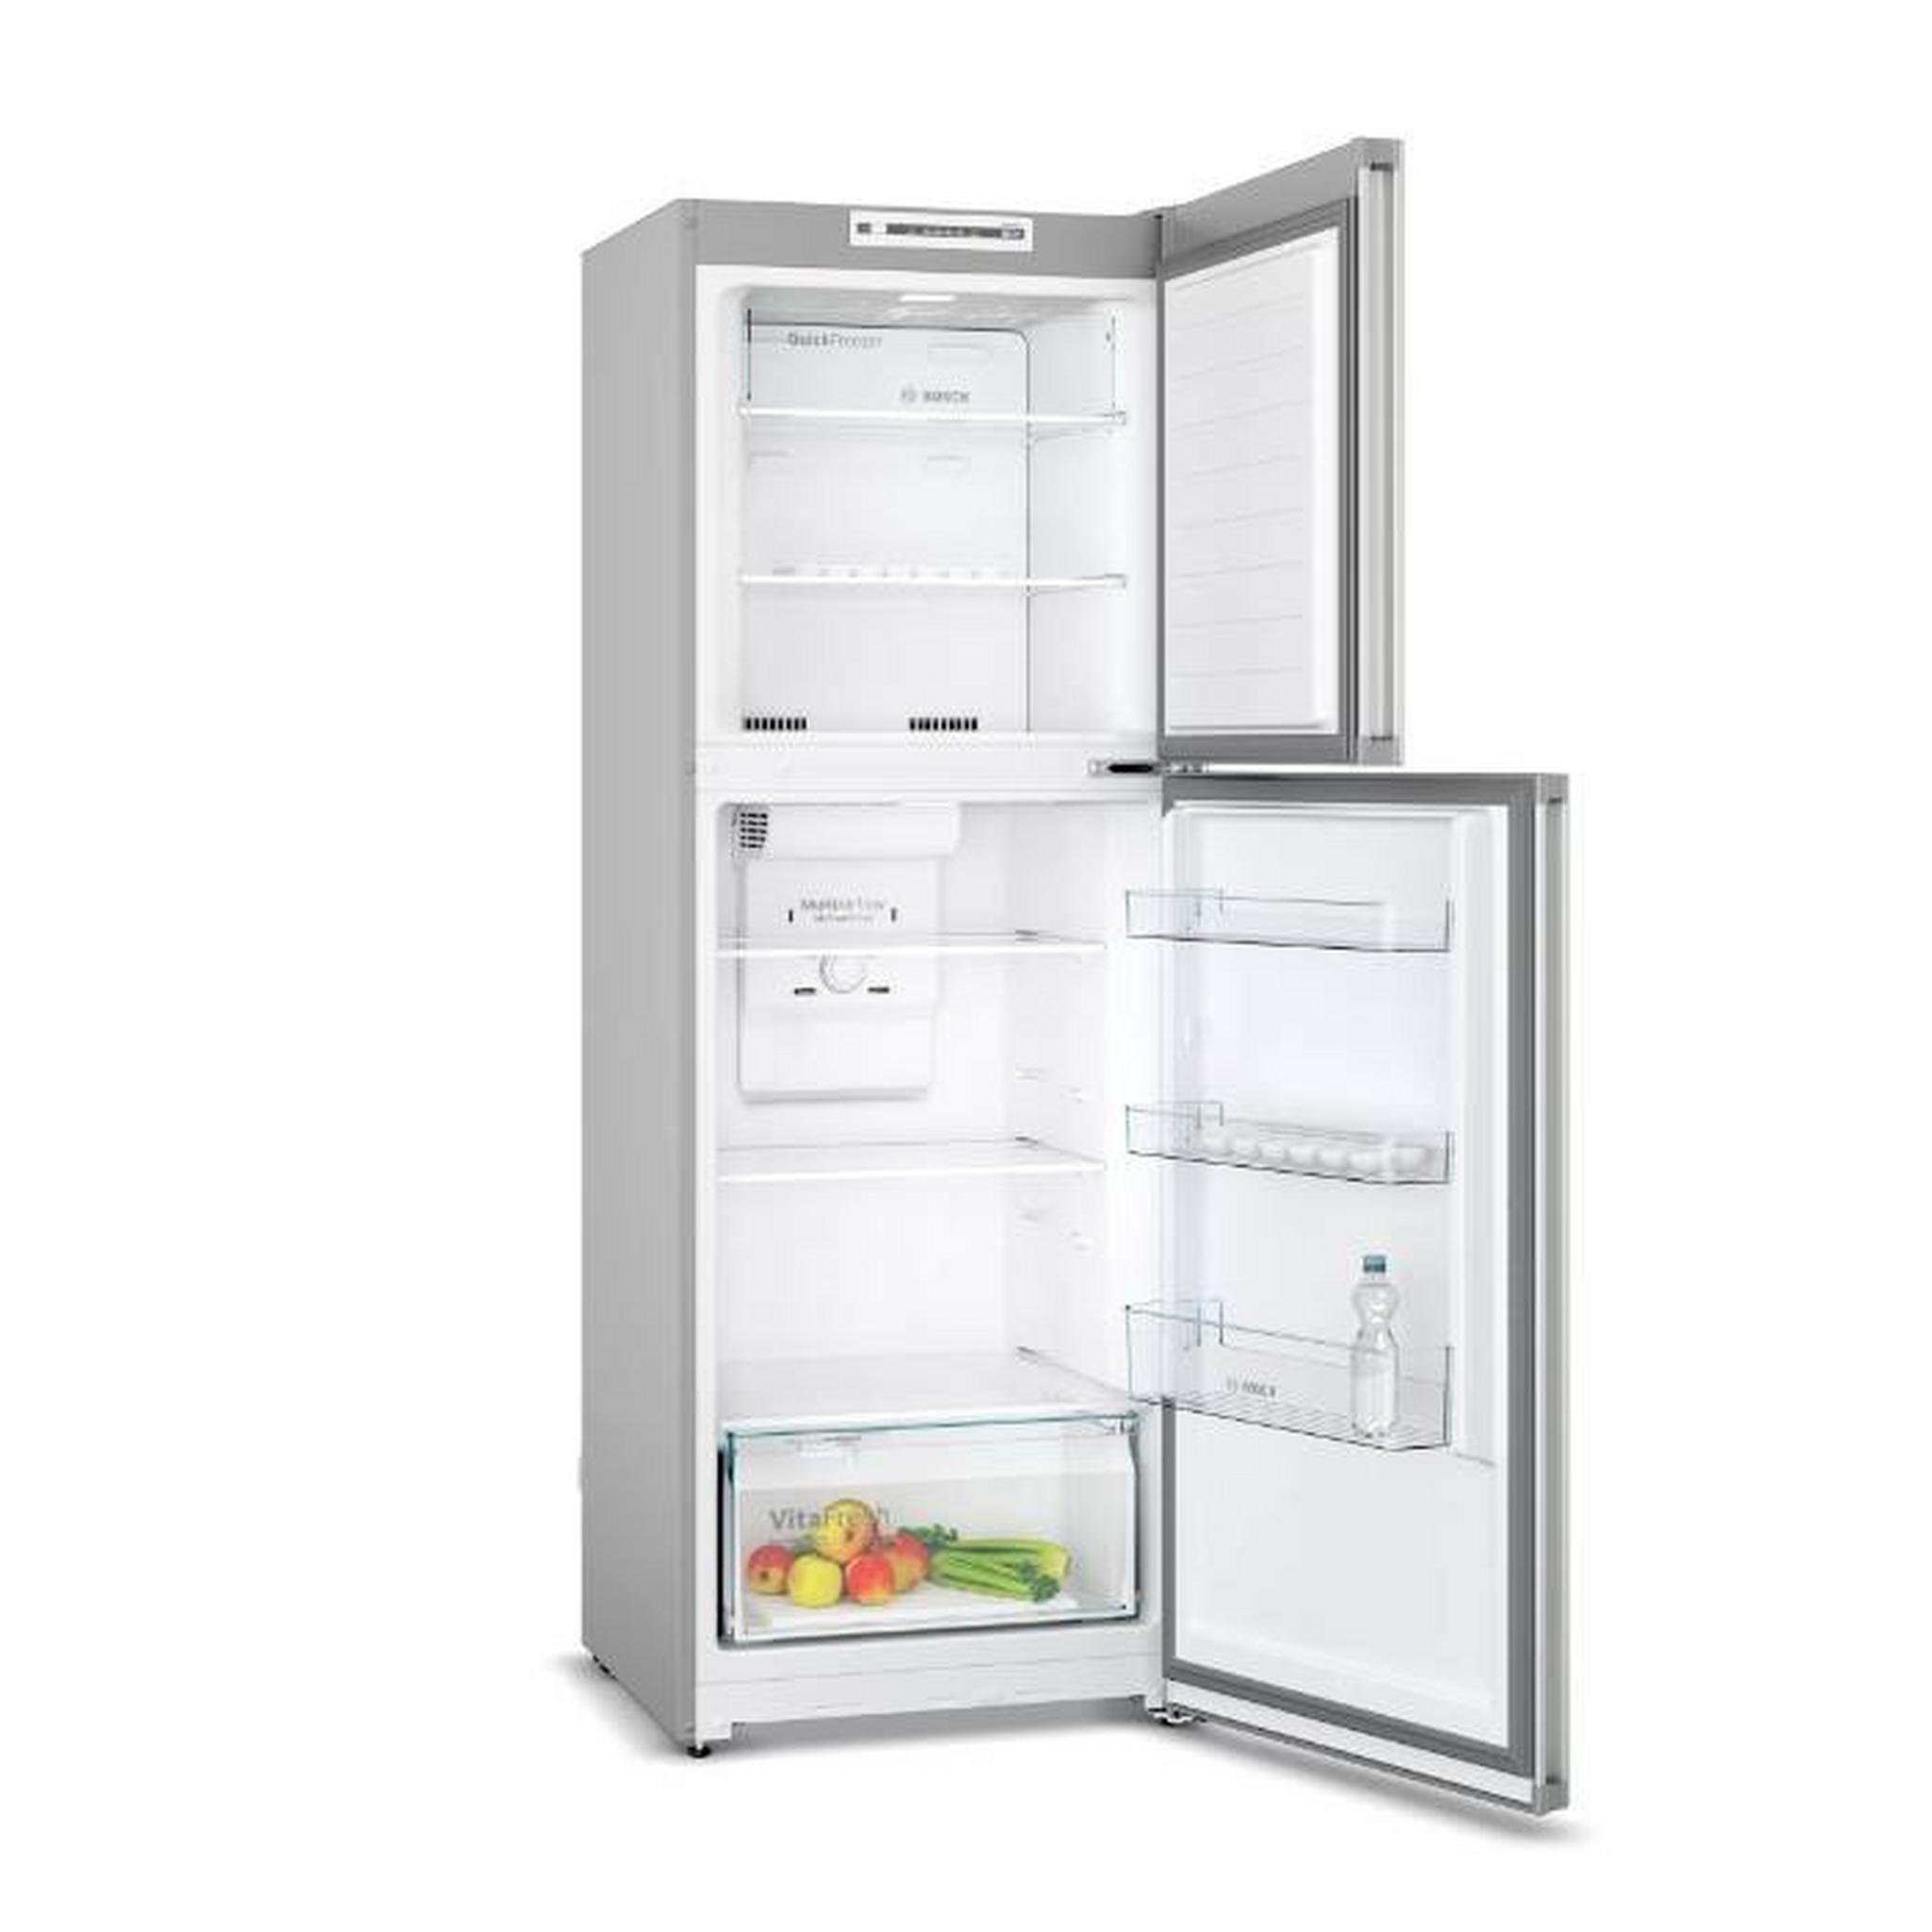 BOSCH Top Mount Refrigerator, 10CFT, 286-Liters, KDN30N120M - Inox